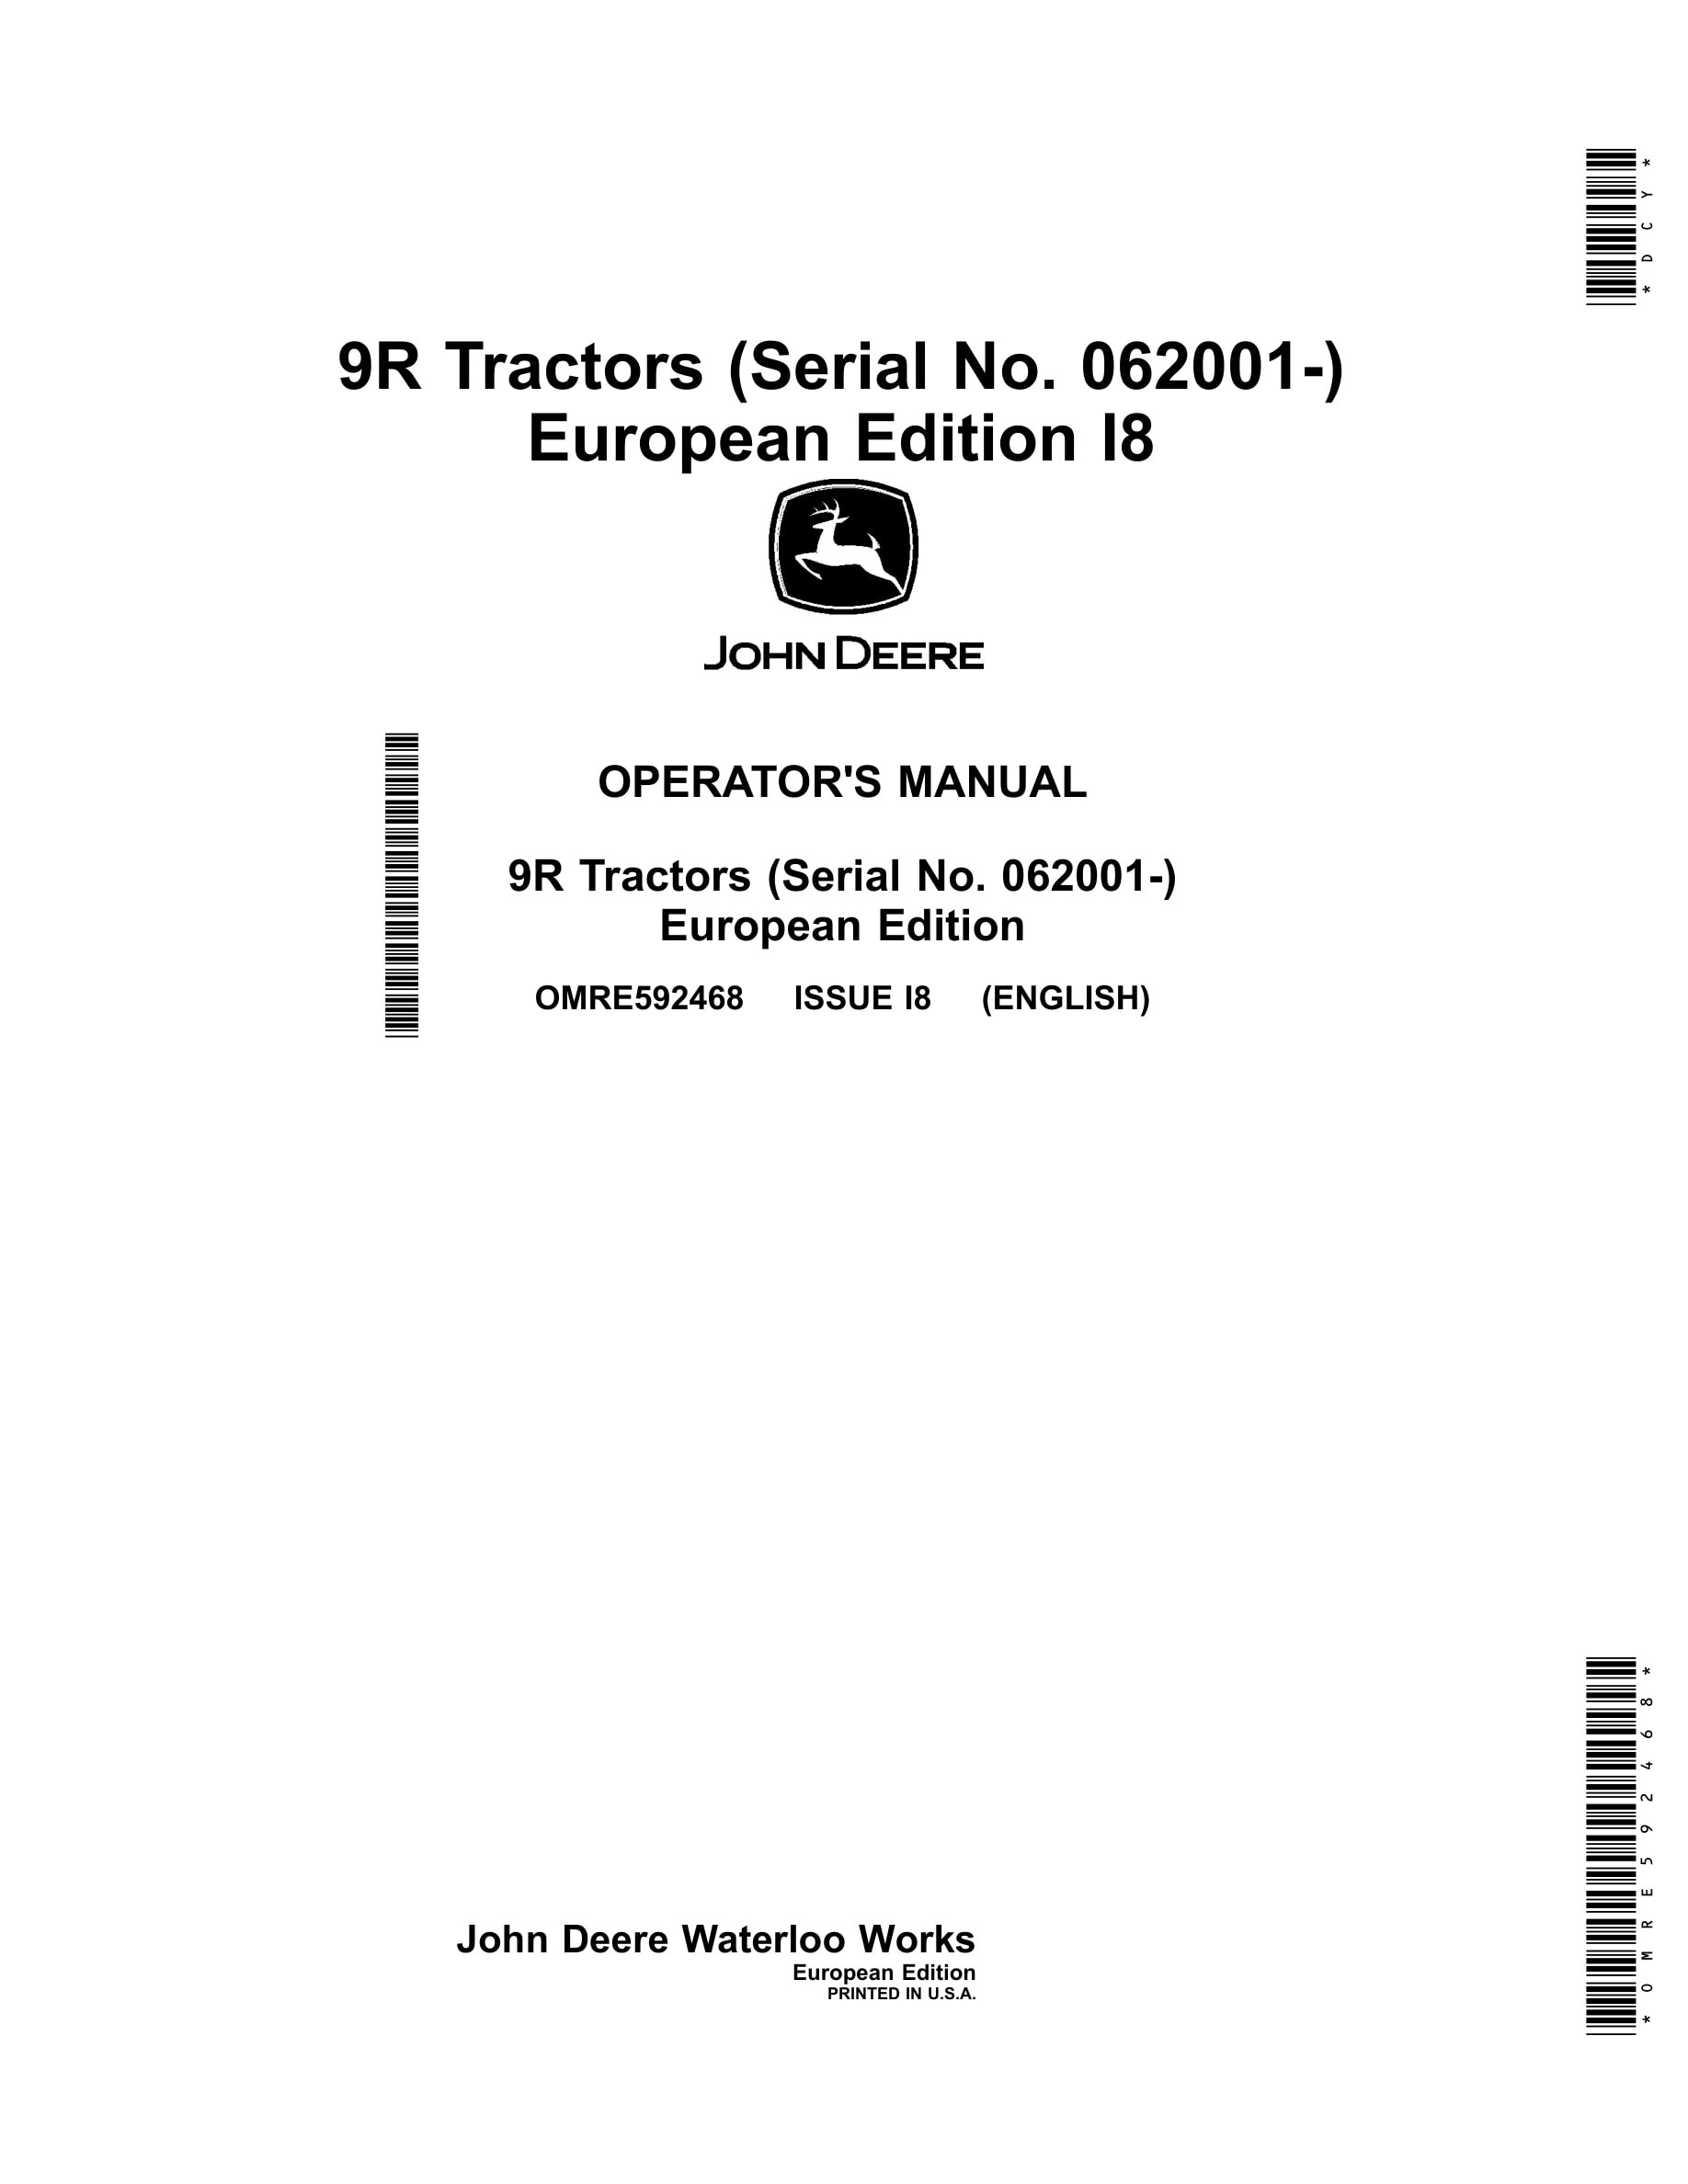 John Deere 9r Tractors Operator Manuals OMRE592468-1